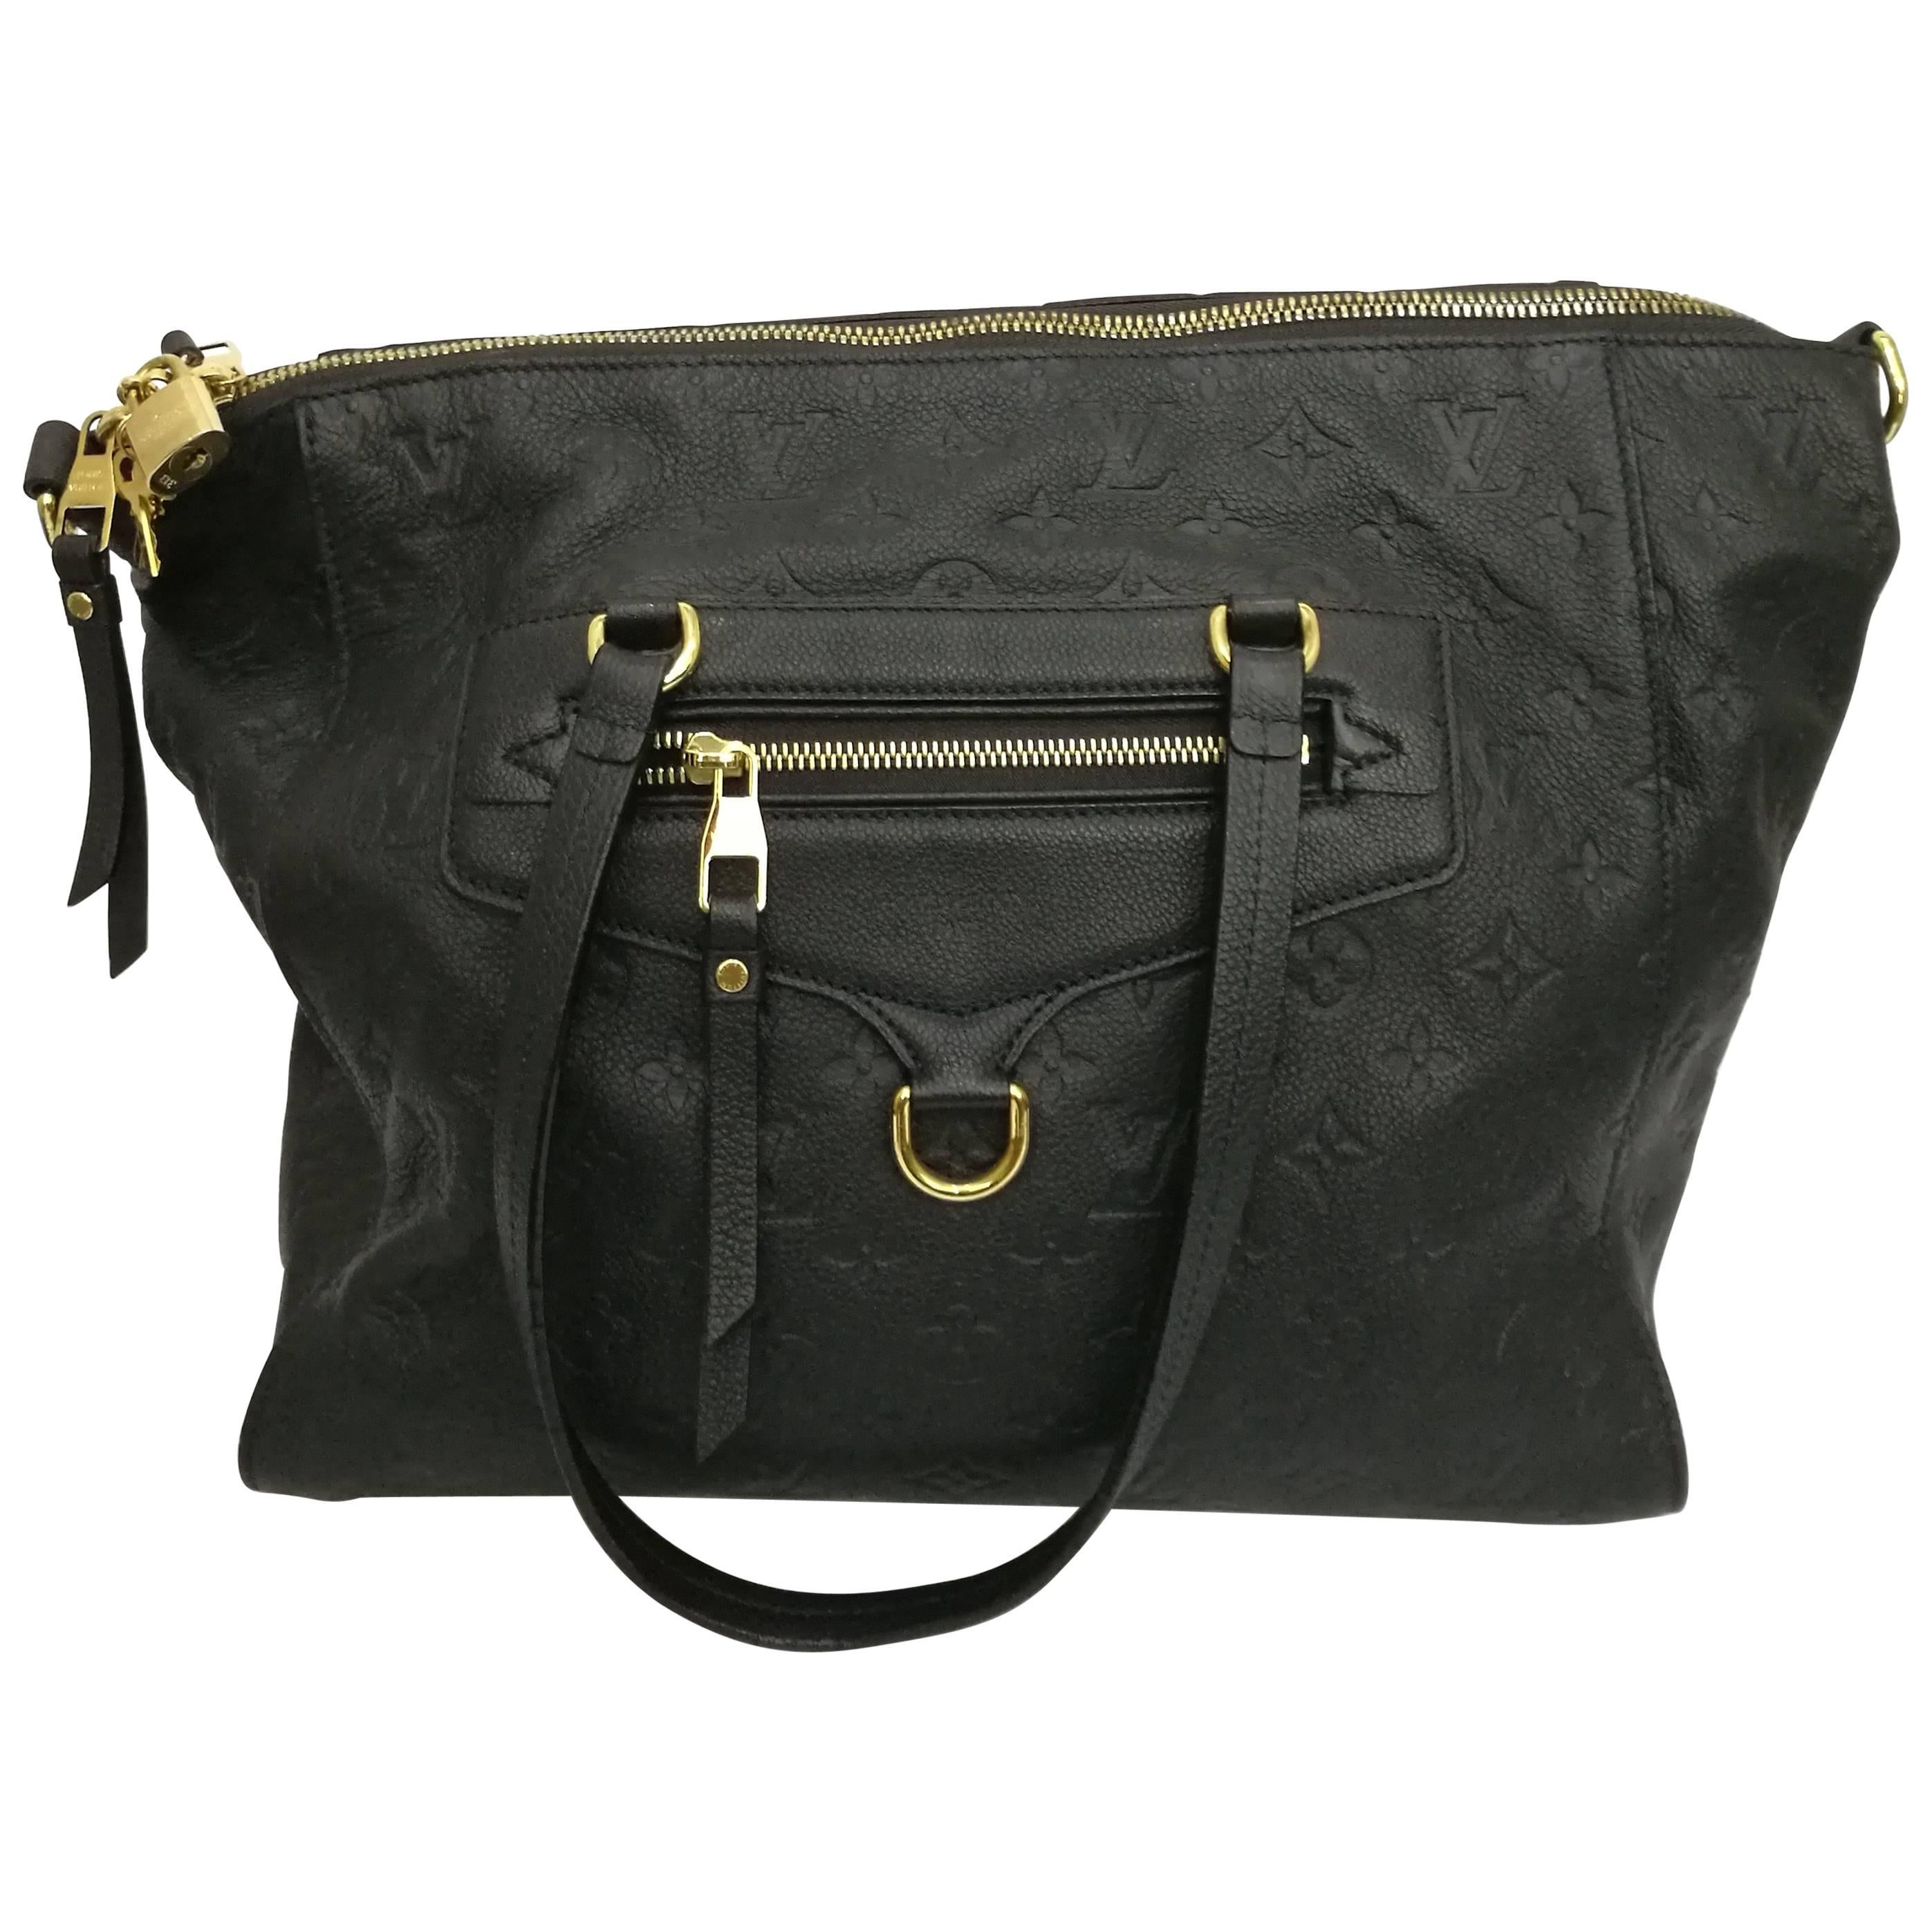 Louis Vuitton Empreinte Leather Bag